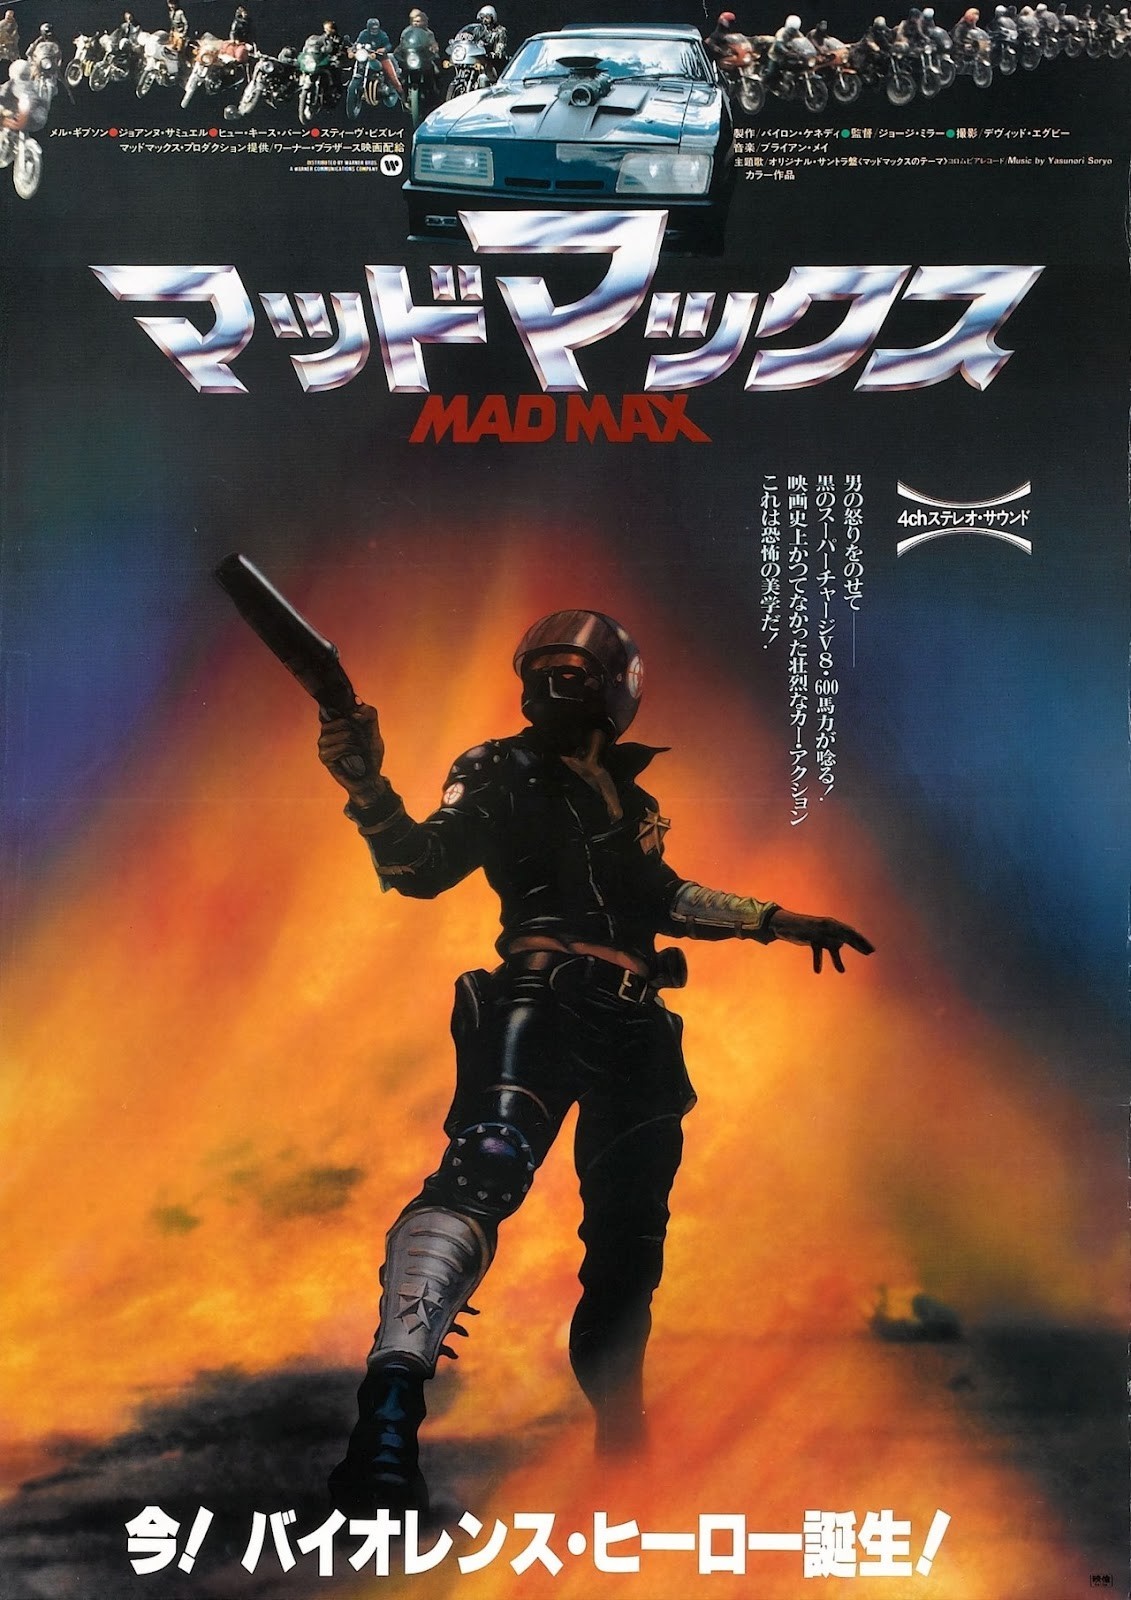 movie poster, poster, machine gun, Mad Max, screenshot, warlord, pc game, action film, mercenary Gallery HD Wallpaper